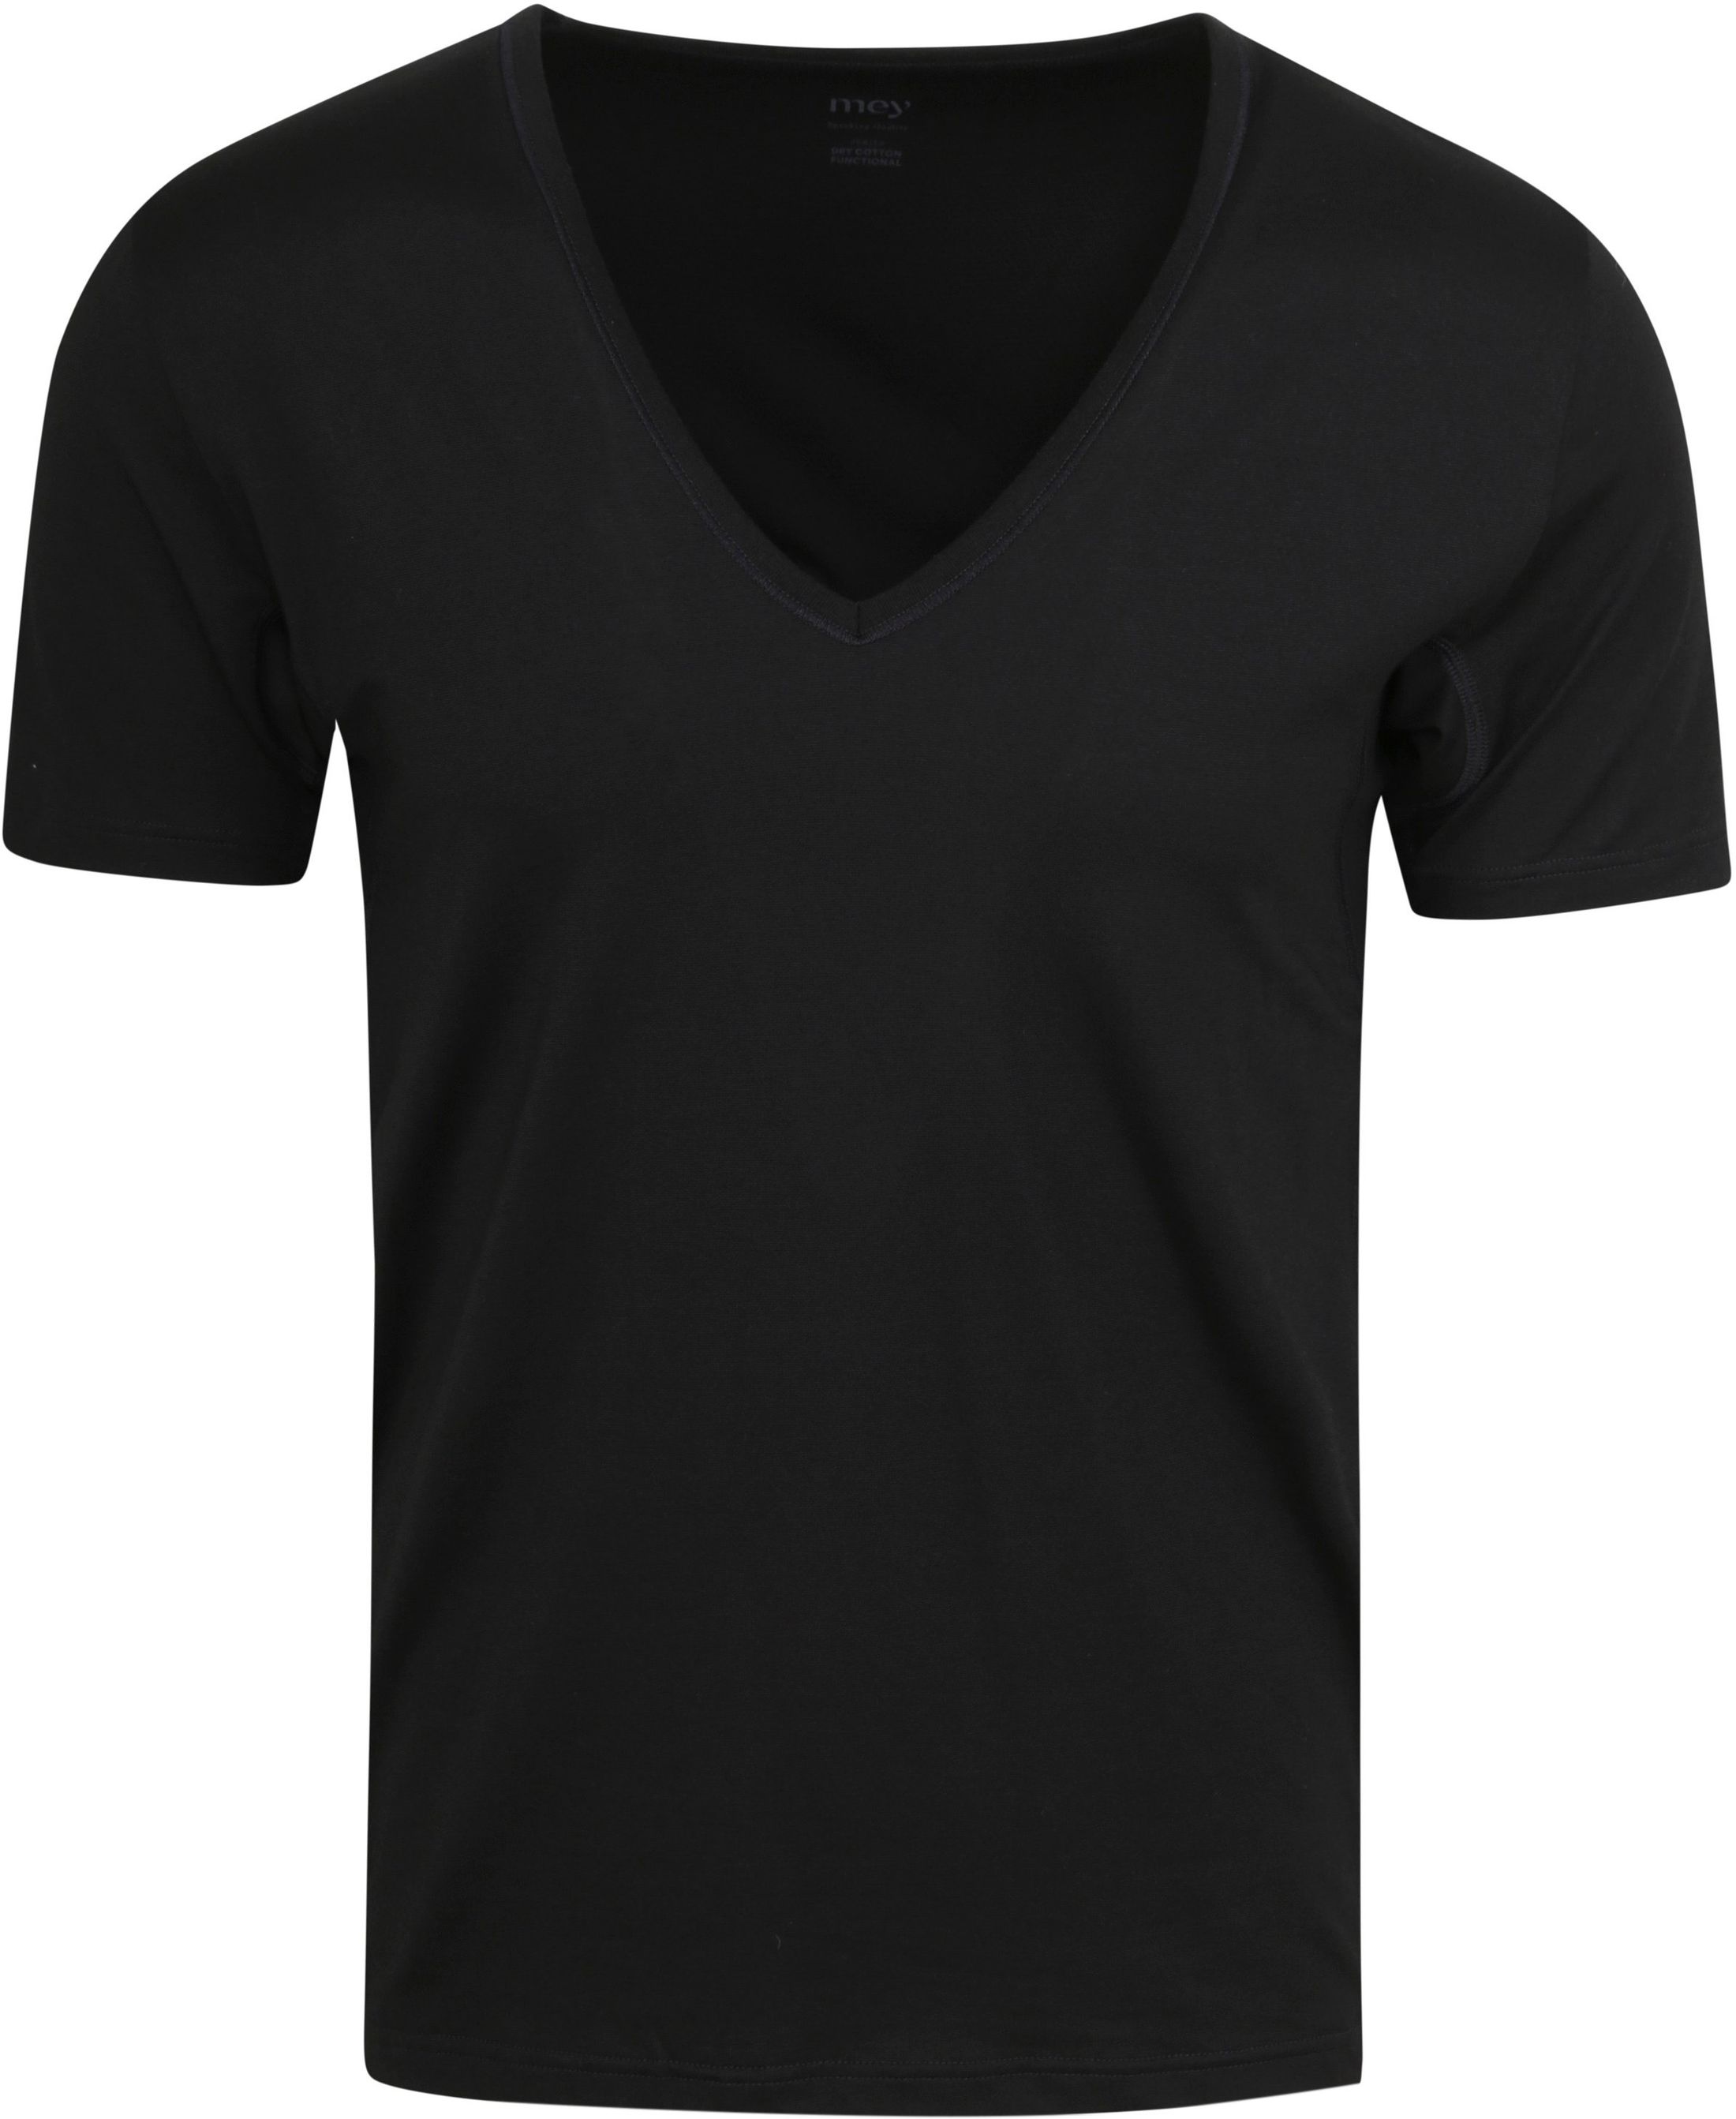 Mey Dry Cotton V-neck T-shirt Black size XXL product